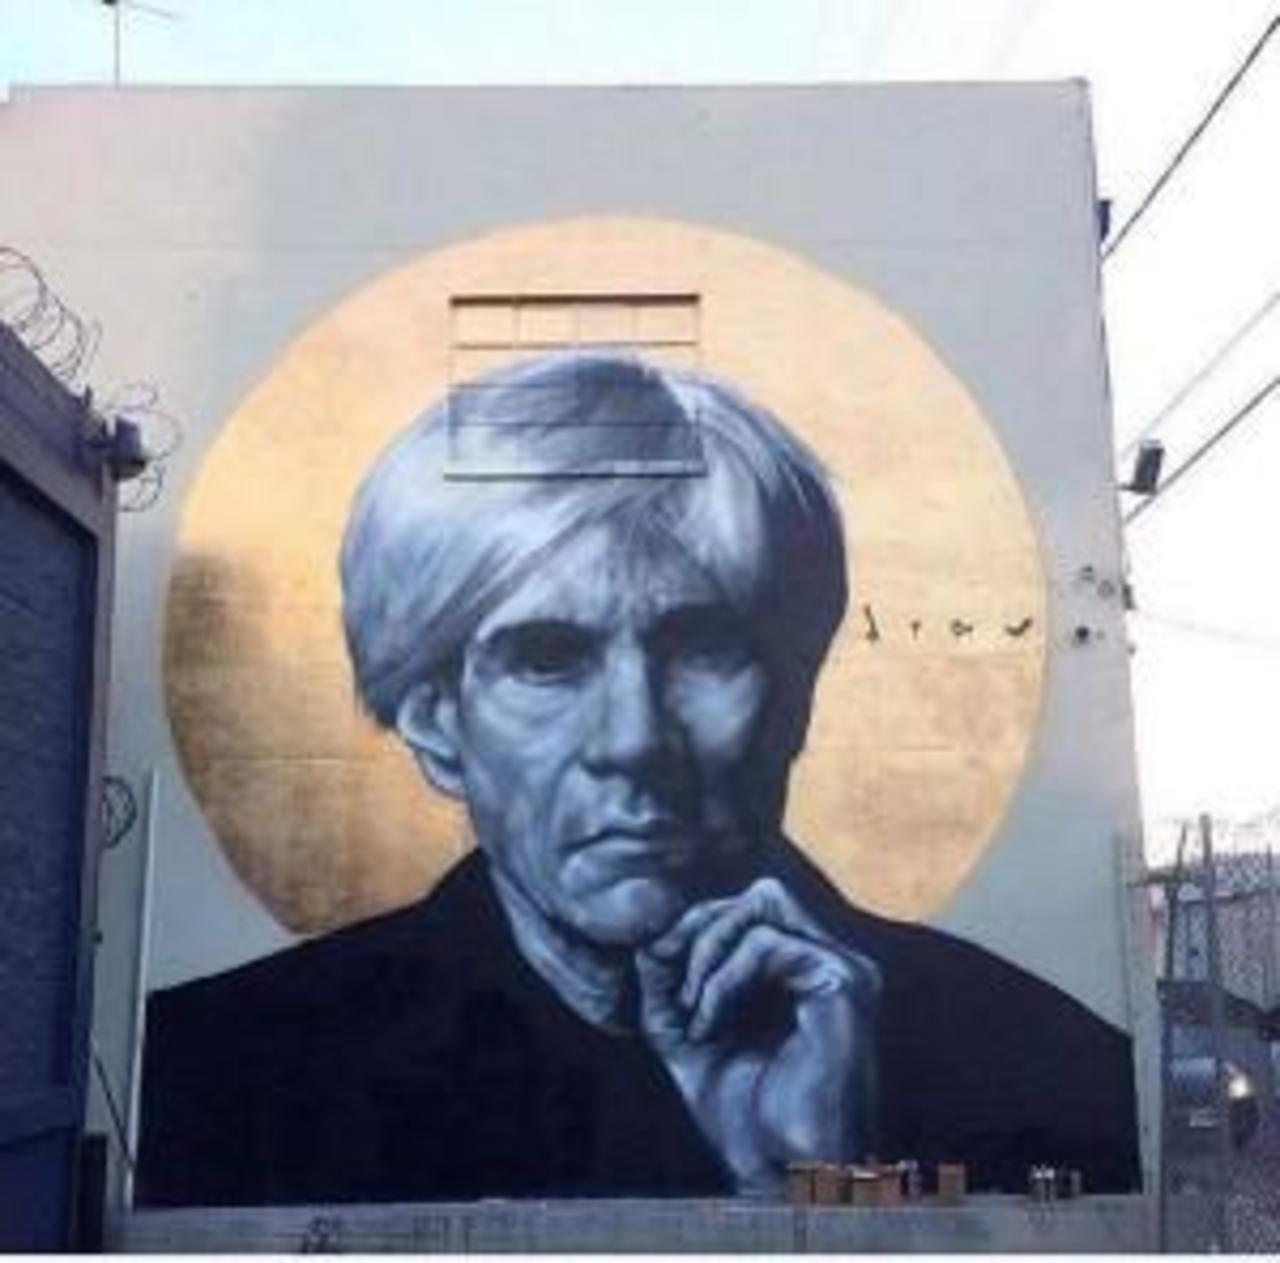 Graffiti is art. #DrewMerritt  #streetart #MURAL  #art #graffiti  #AndyWarhol  #spraypaint #gold #blue http://t.co/0shuygX475